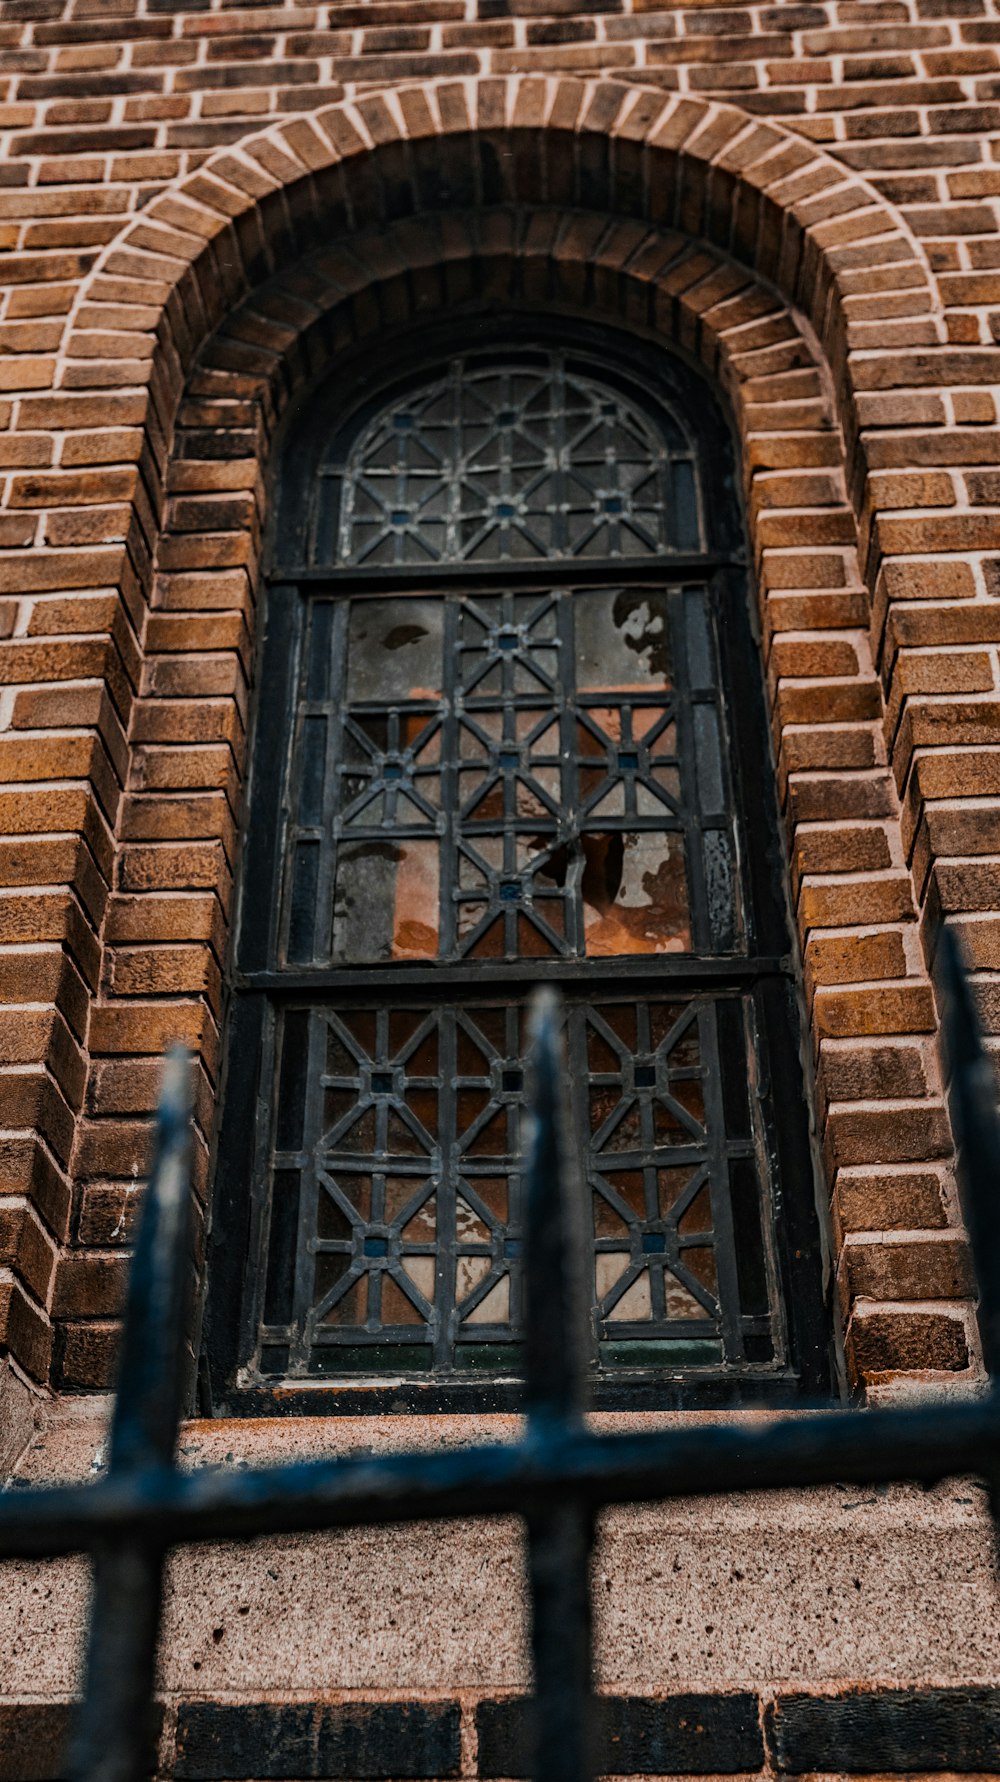 a window in a brick building